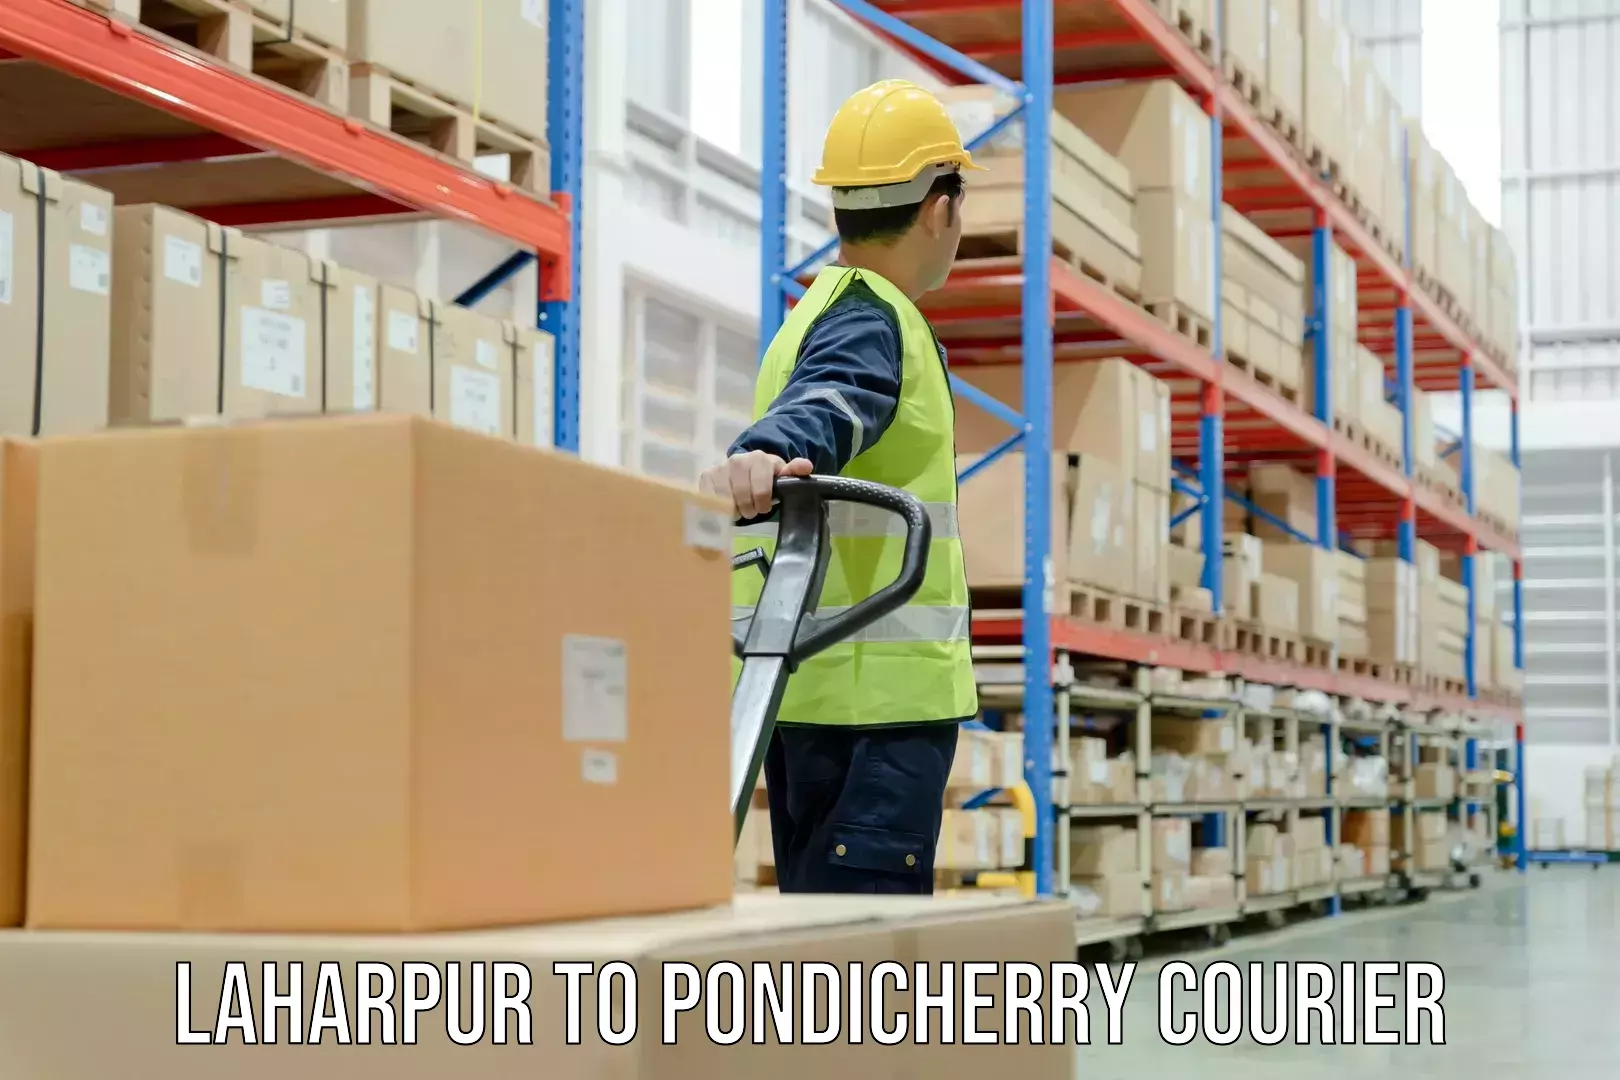 Global shipping networks Laharpur to Pondicherry